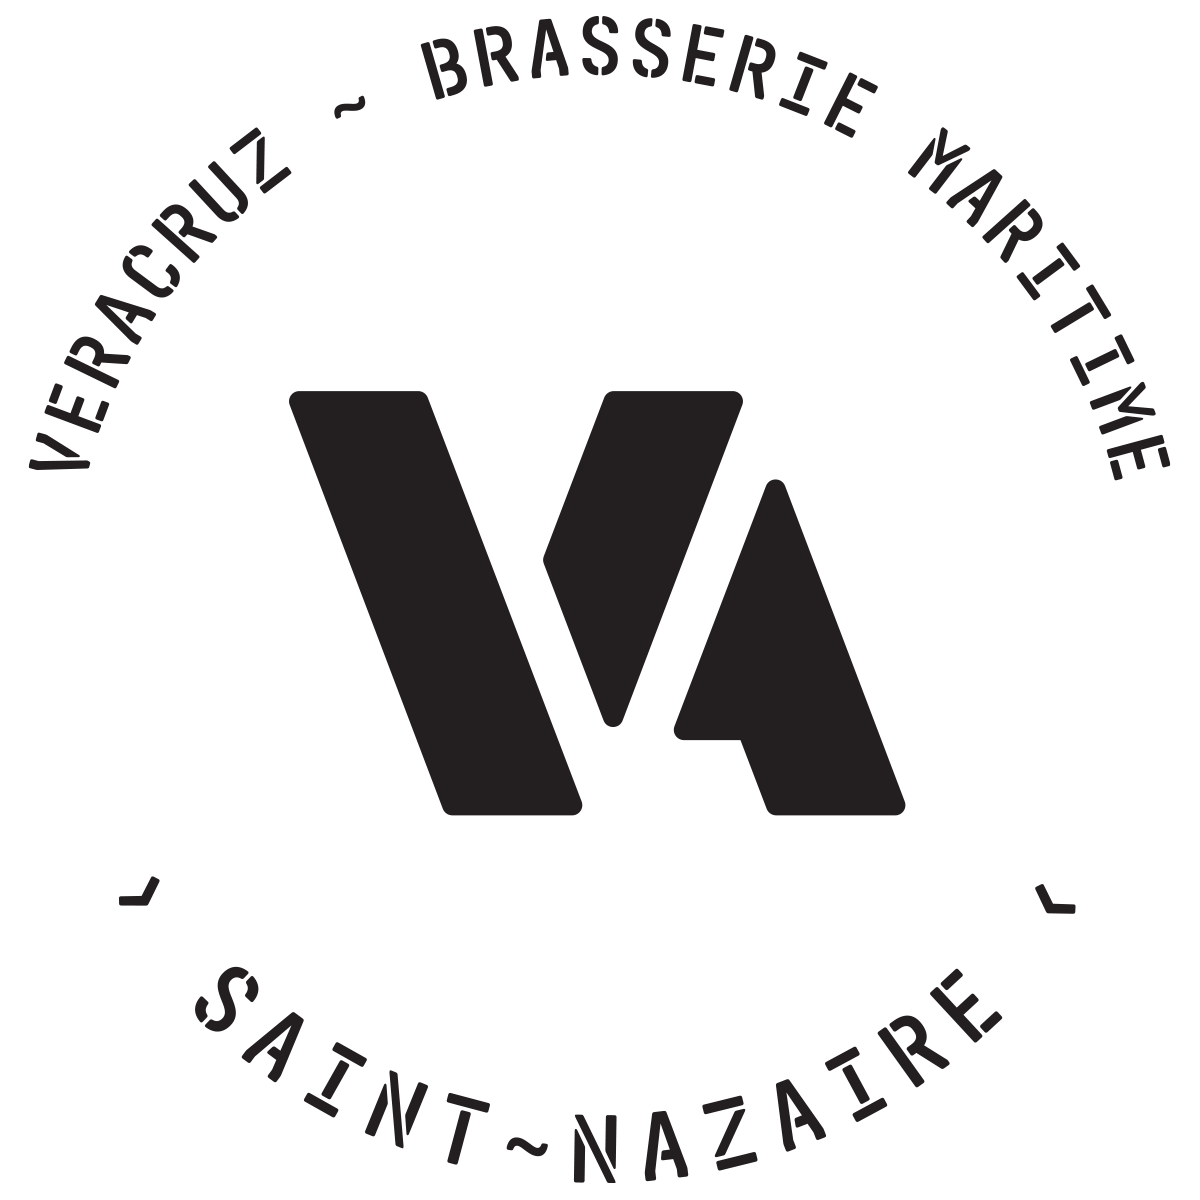 Veracruz - Brasserie maritime - Sainte-Nazaire